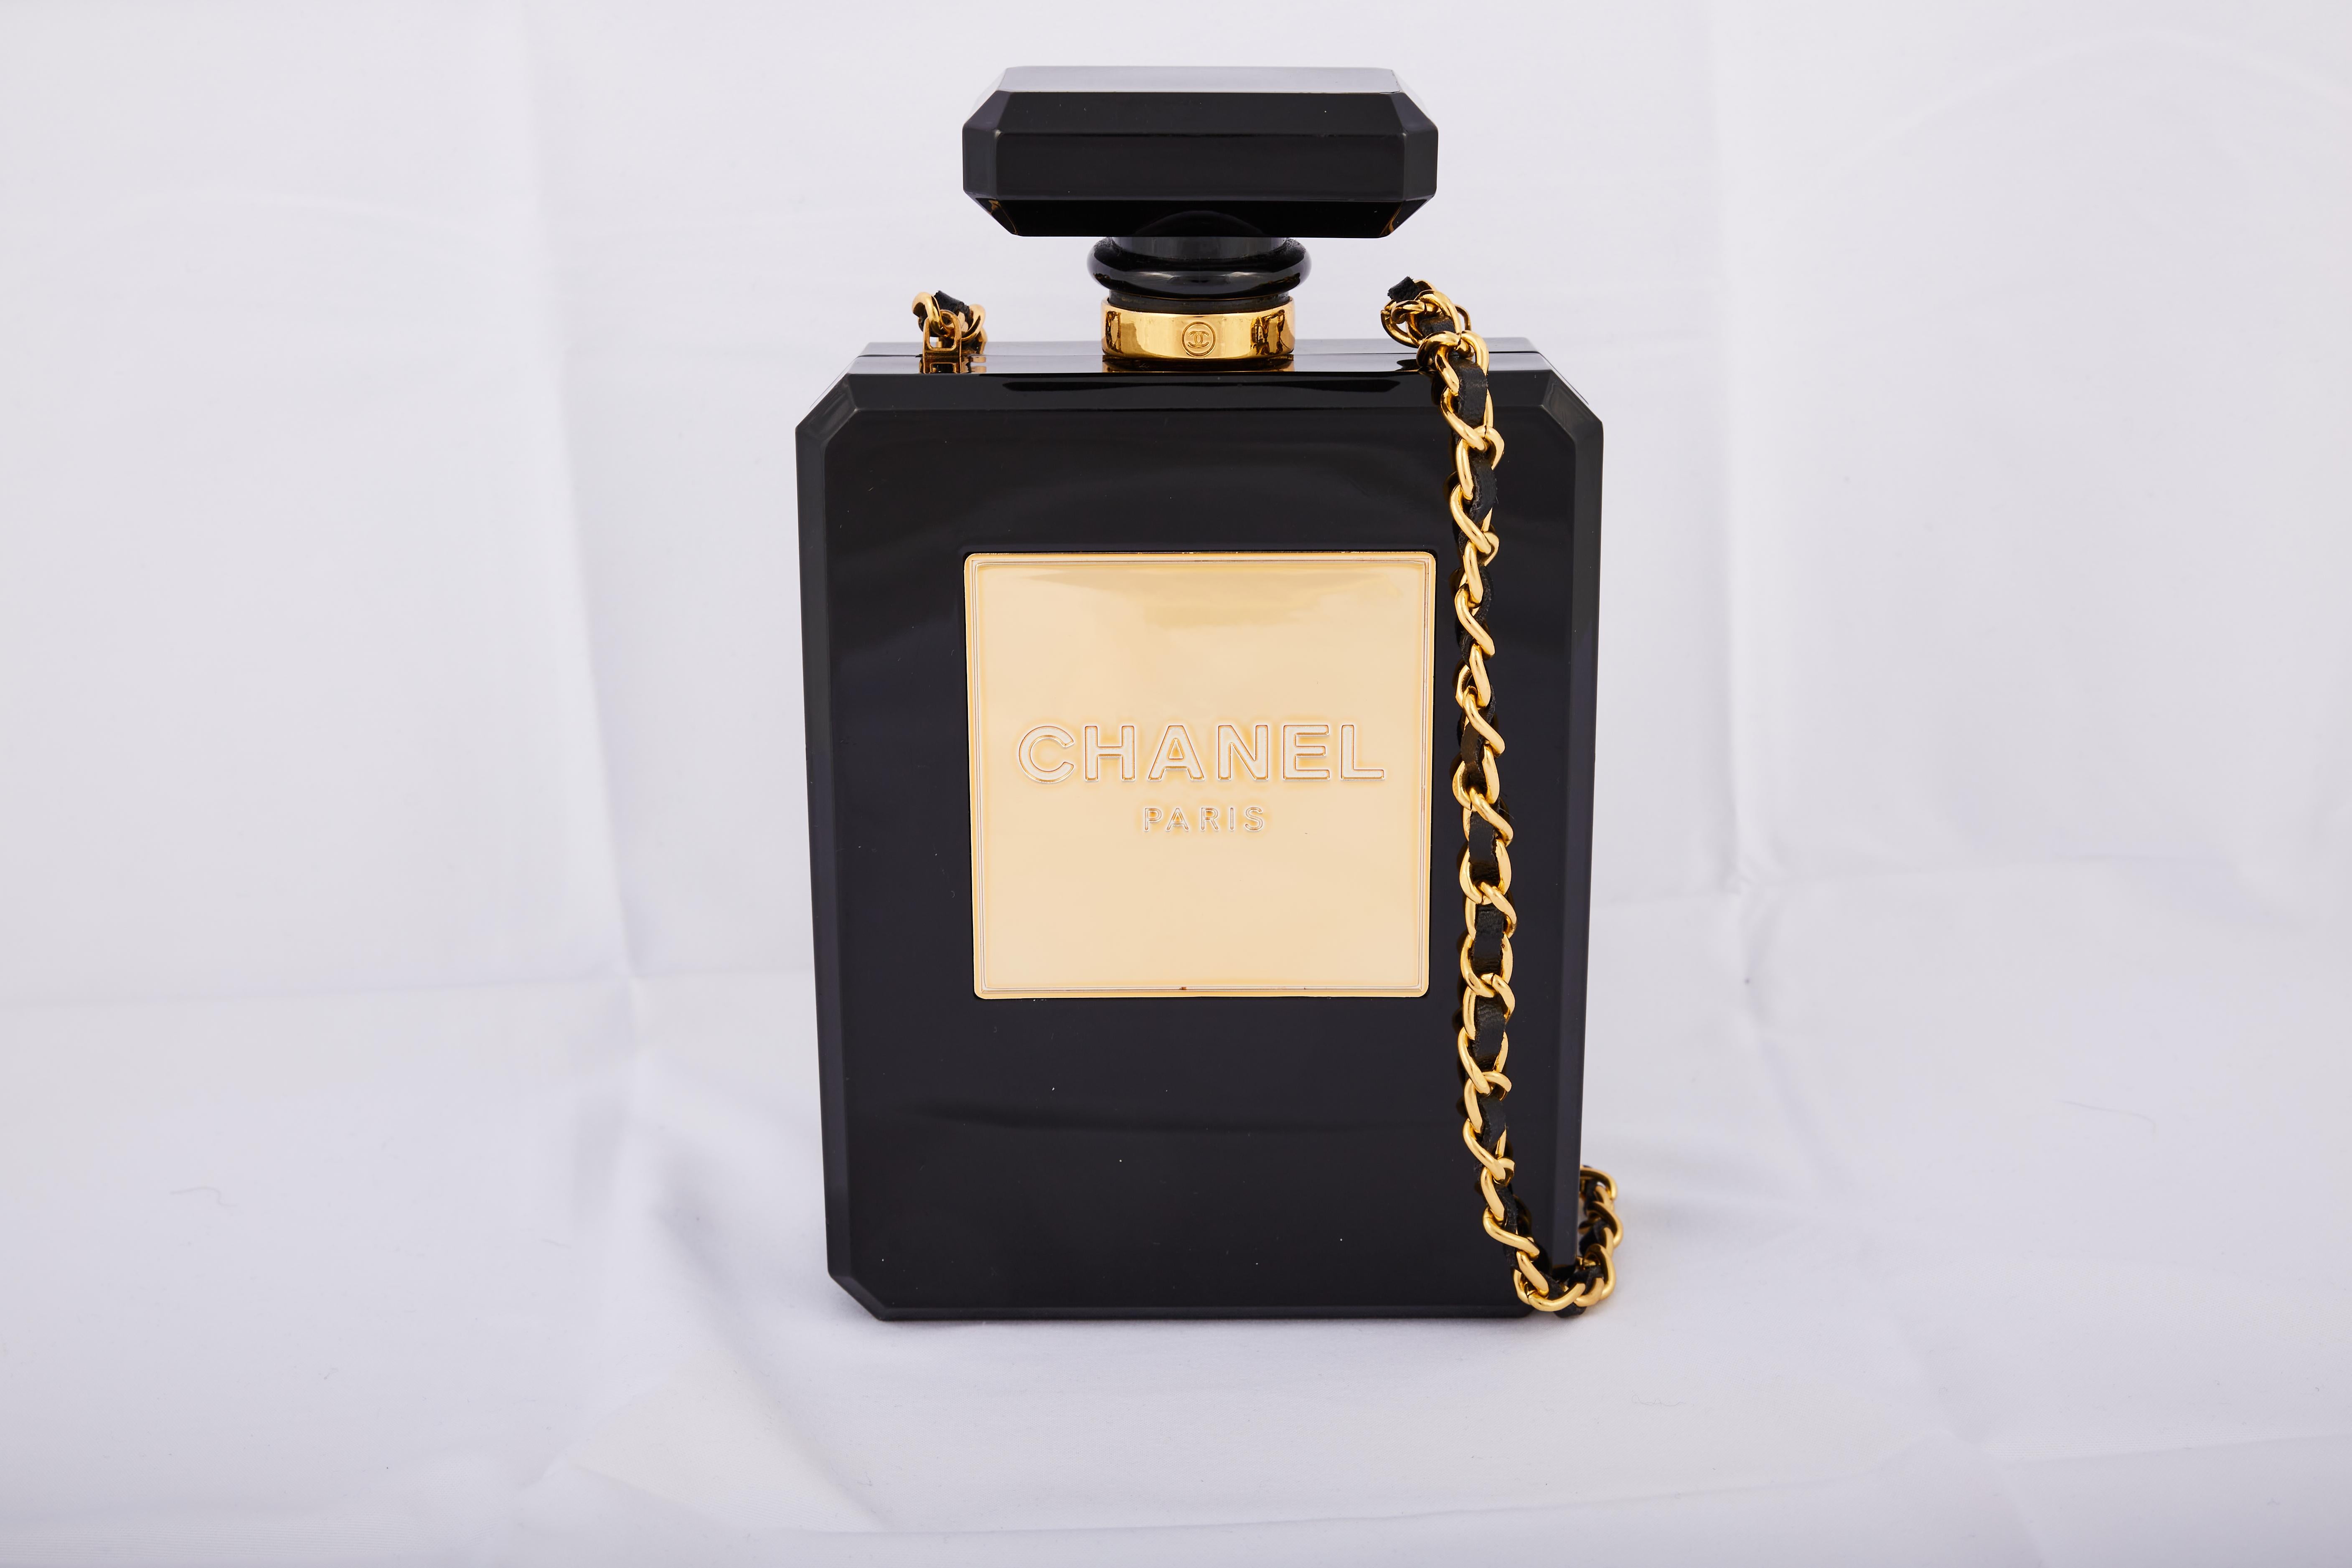 Chanel No5 Perfume Black Limited Edition Evening Shoulder Bag For Sale 1